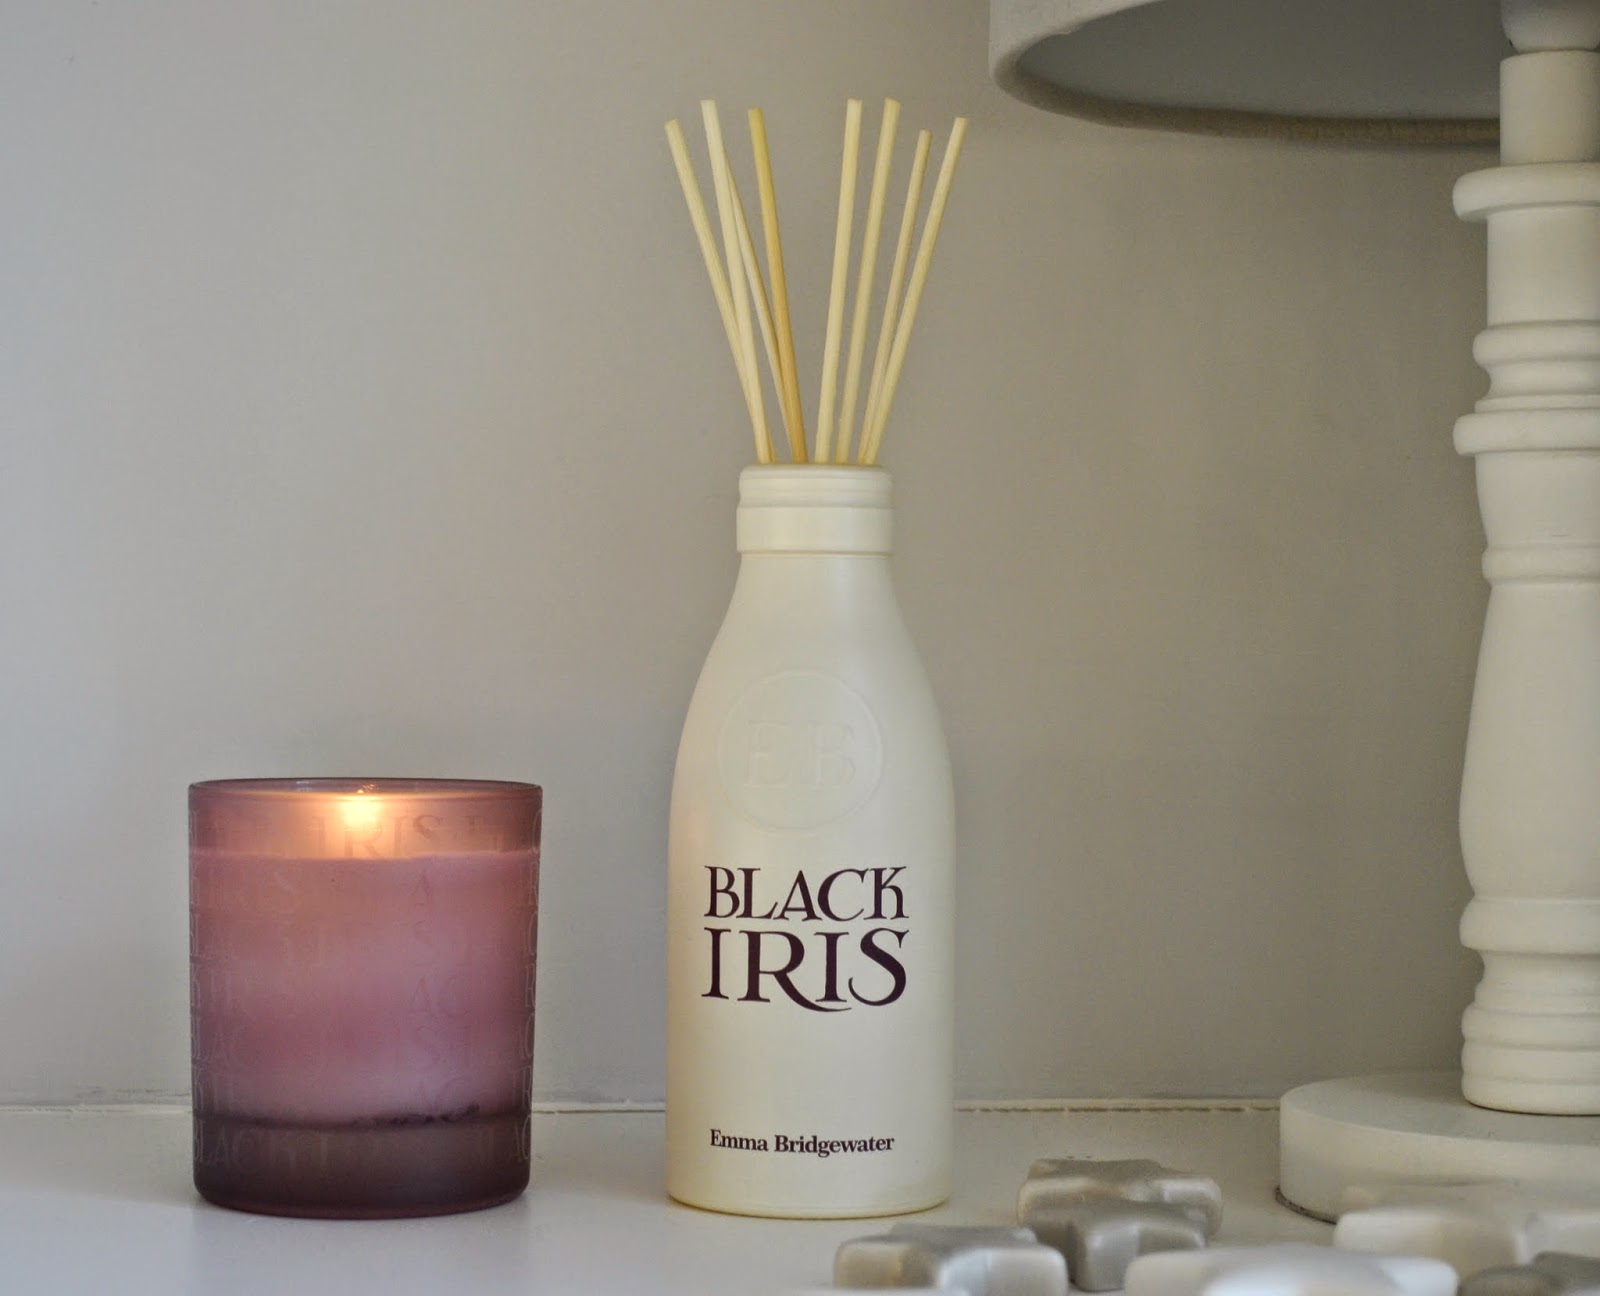 Emma Bridgewater Black Iris candle